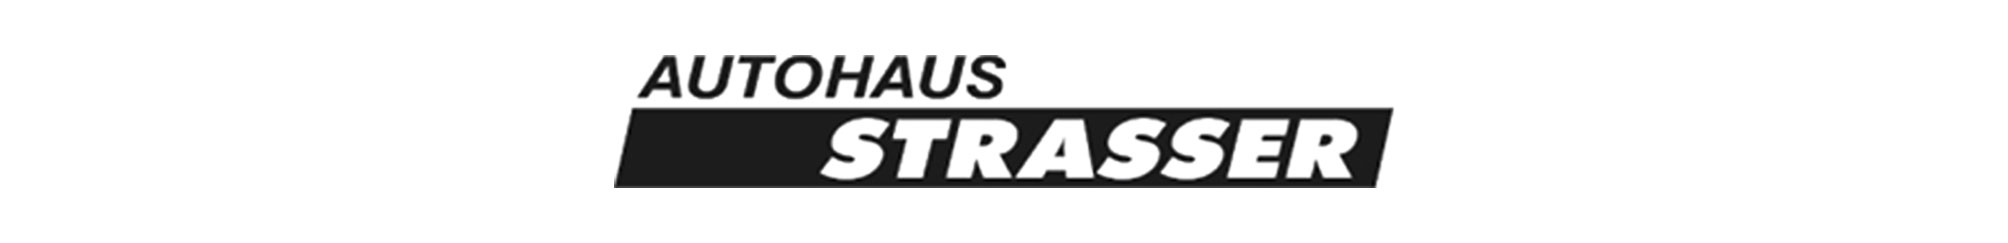 Autohaus Strasser - Christian Strasser e.K.